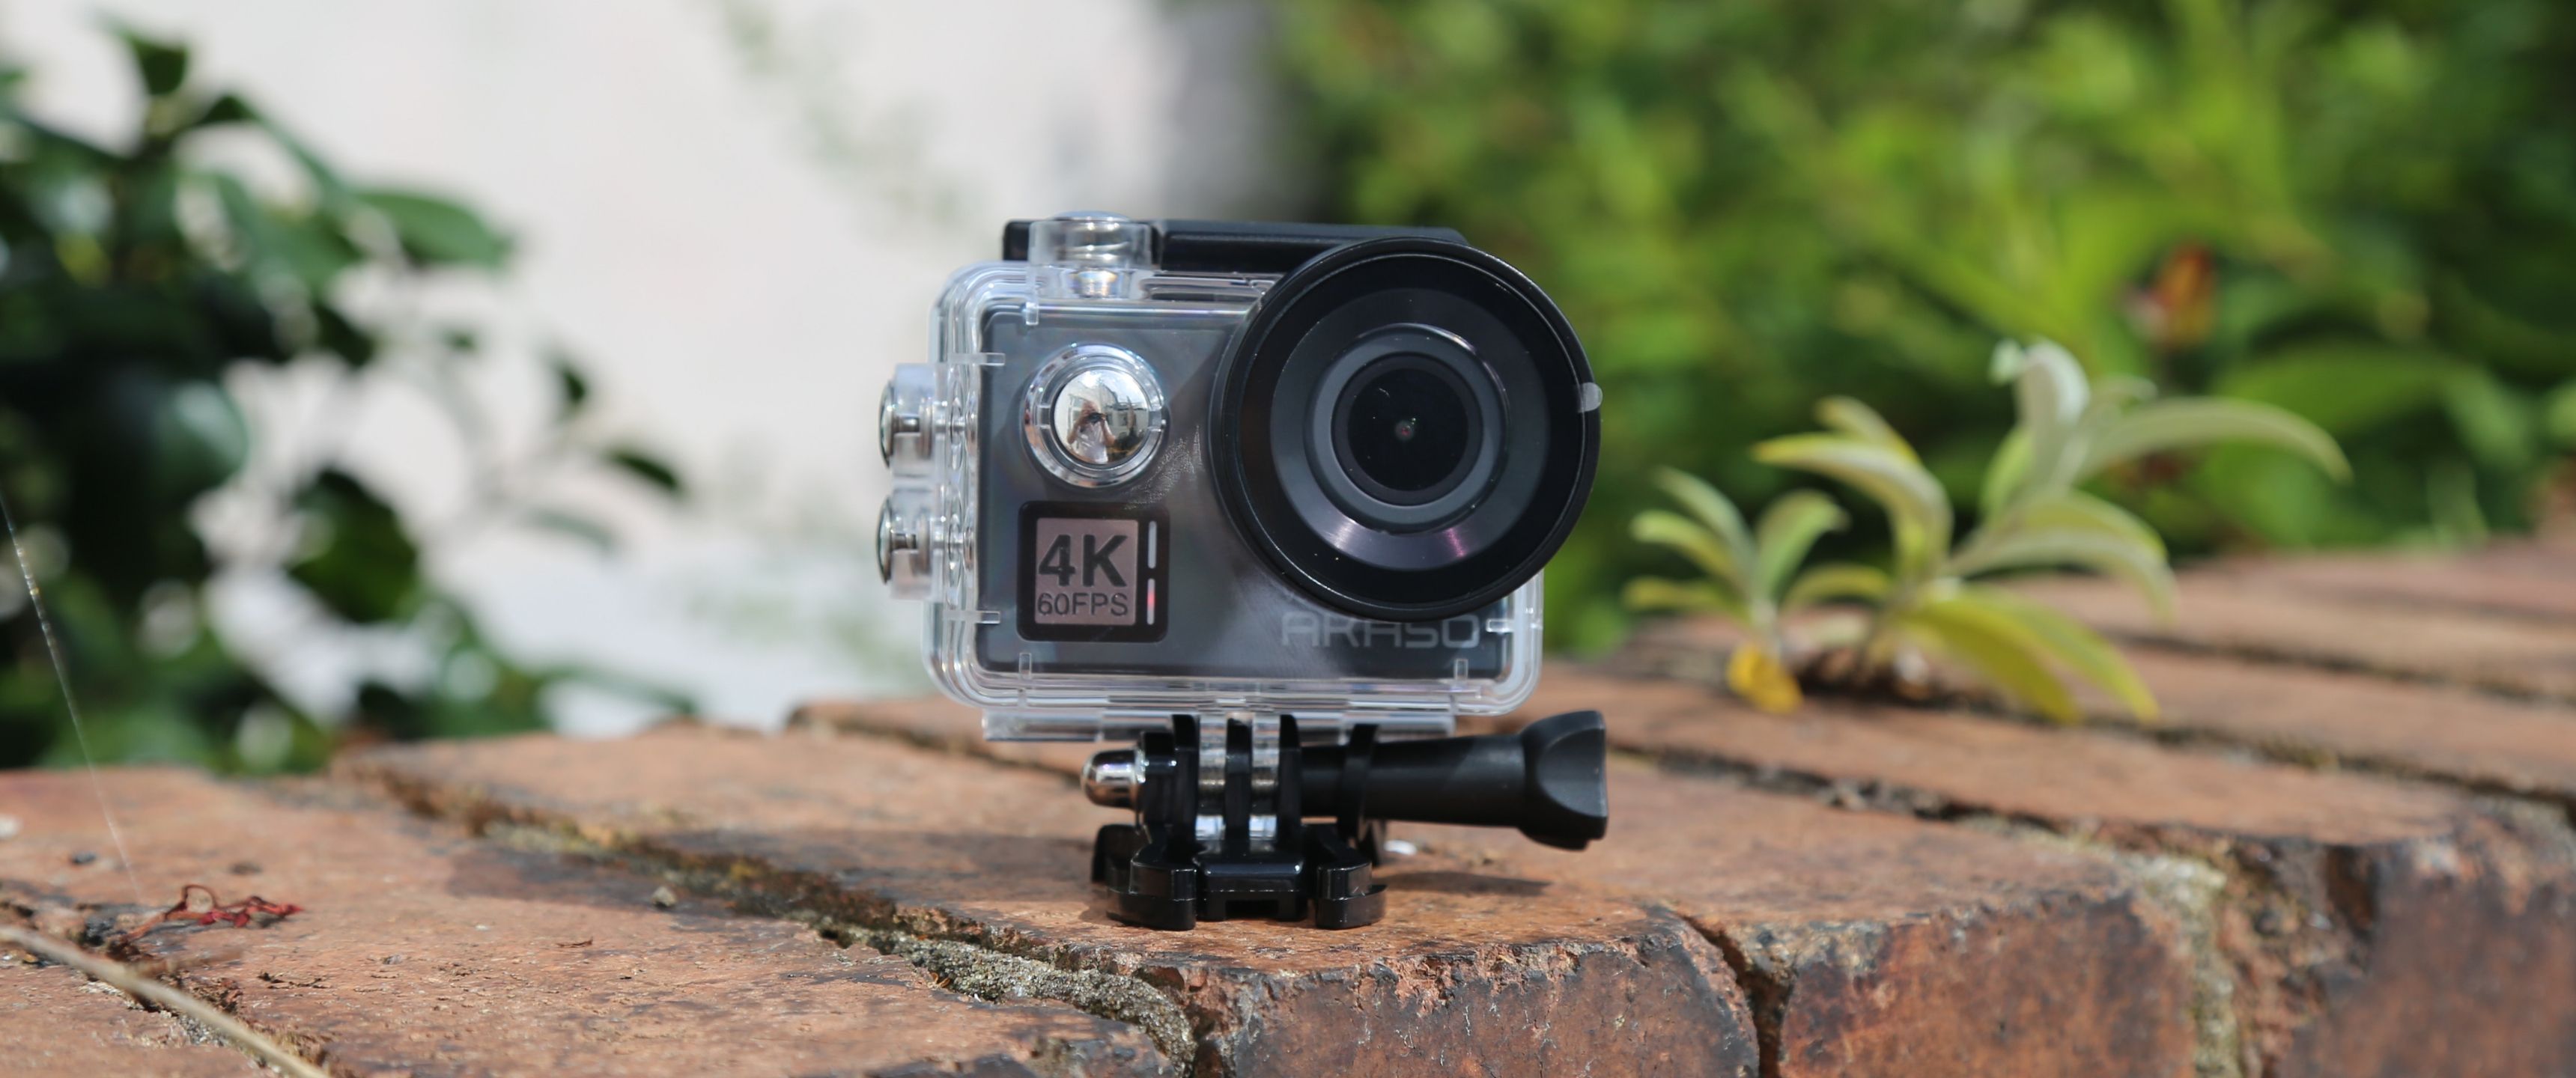 AKASO V50 ELITE CAMERA 4K 60FPS ✔️ [EN] Action camera 